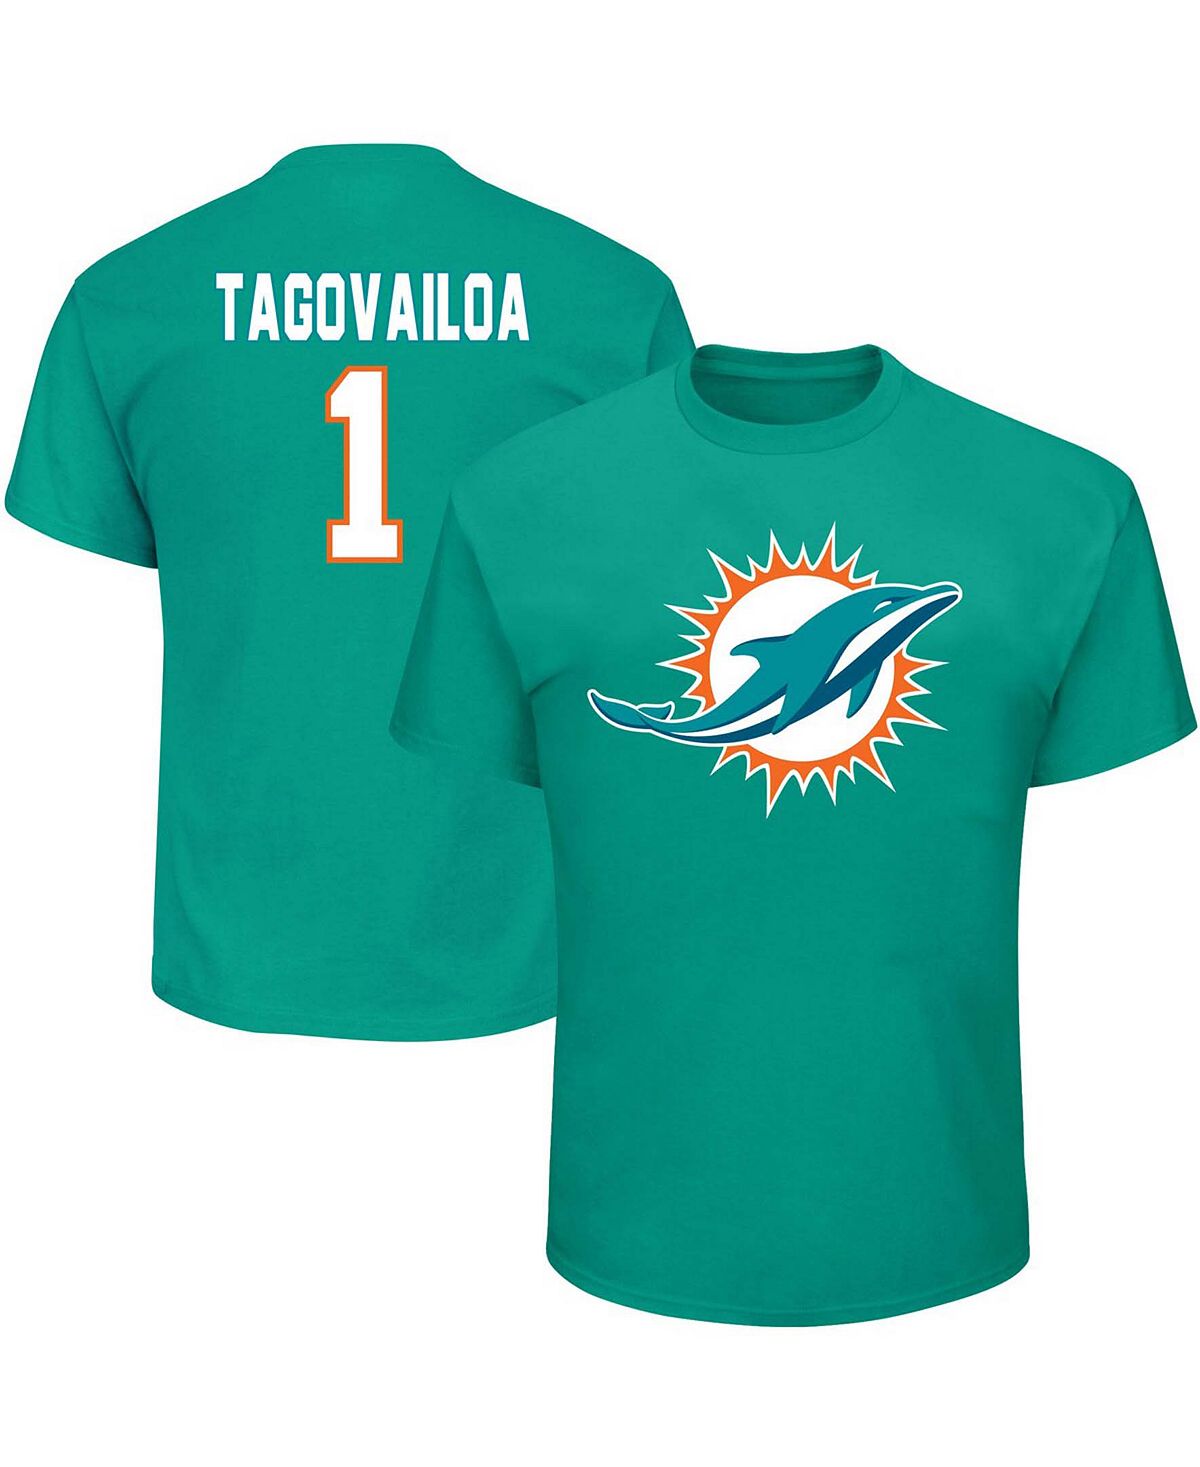 цена Мужская футболка Big and Tall Tua Tagovailoa Aqua Miami Dolphins, имеющая право на получение получателя Iii, имя, номер Fanatics